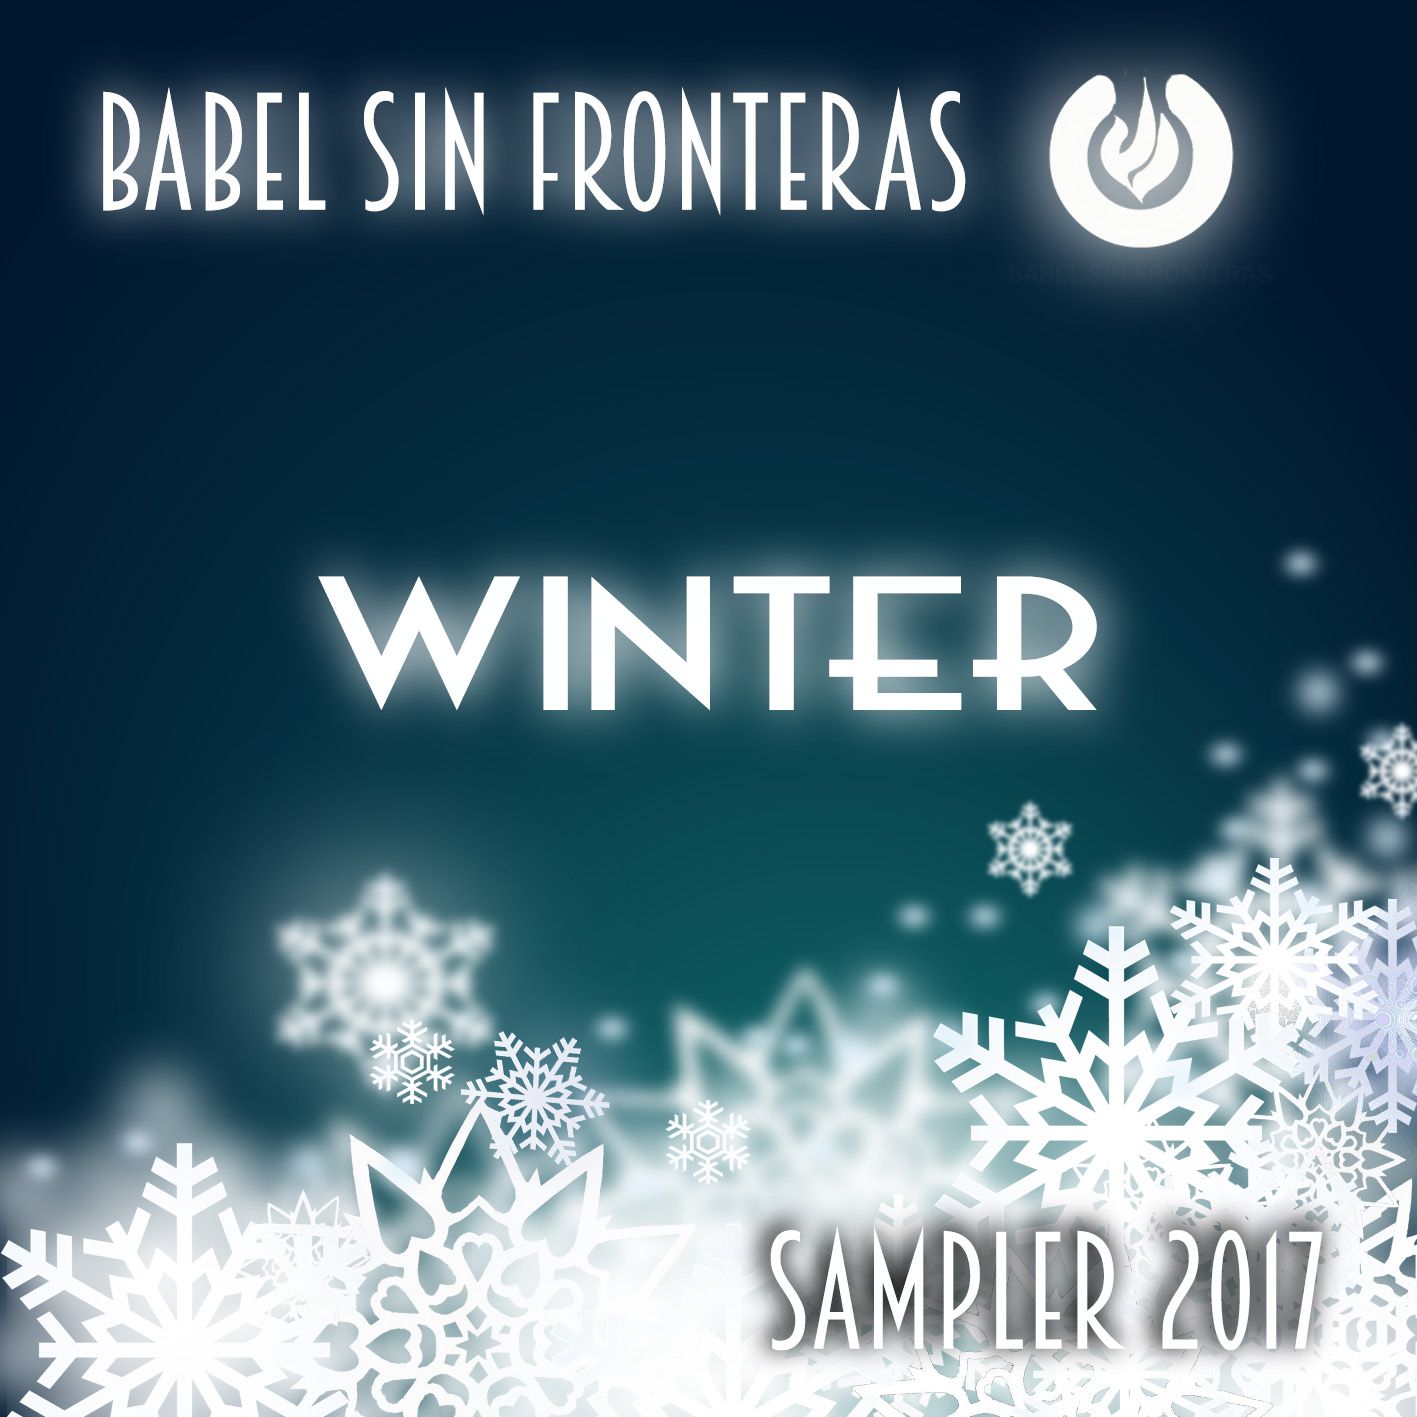 Winter sampler portada 2017 Babel.jpg